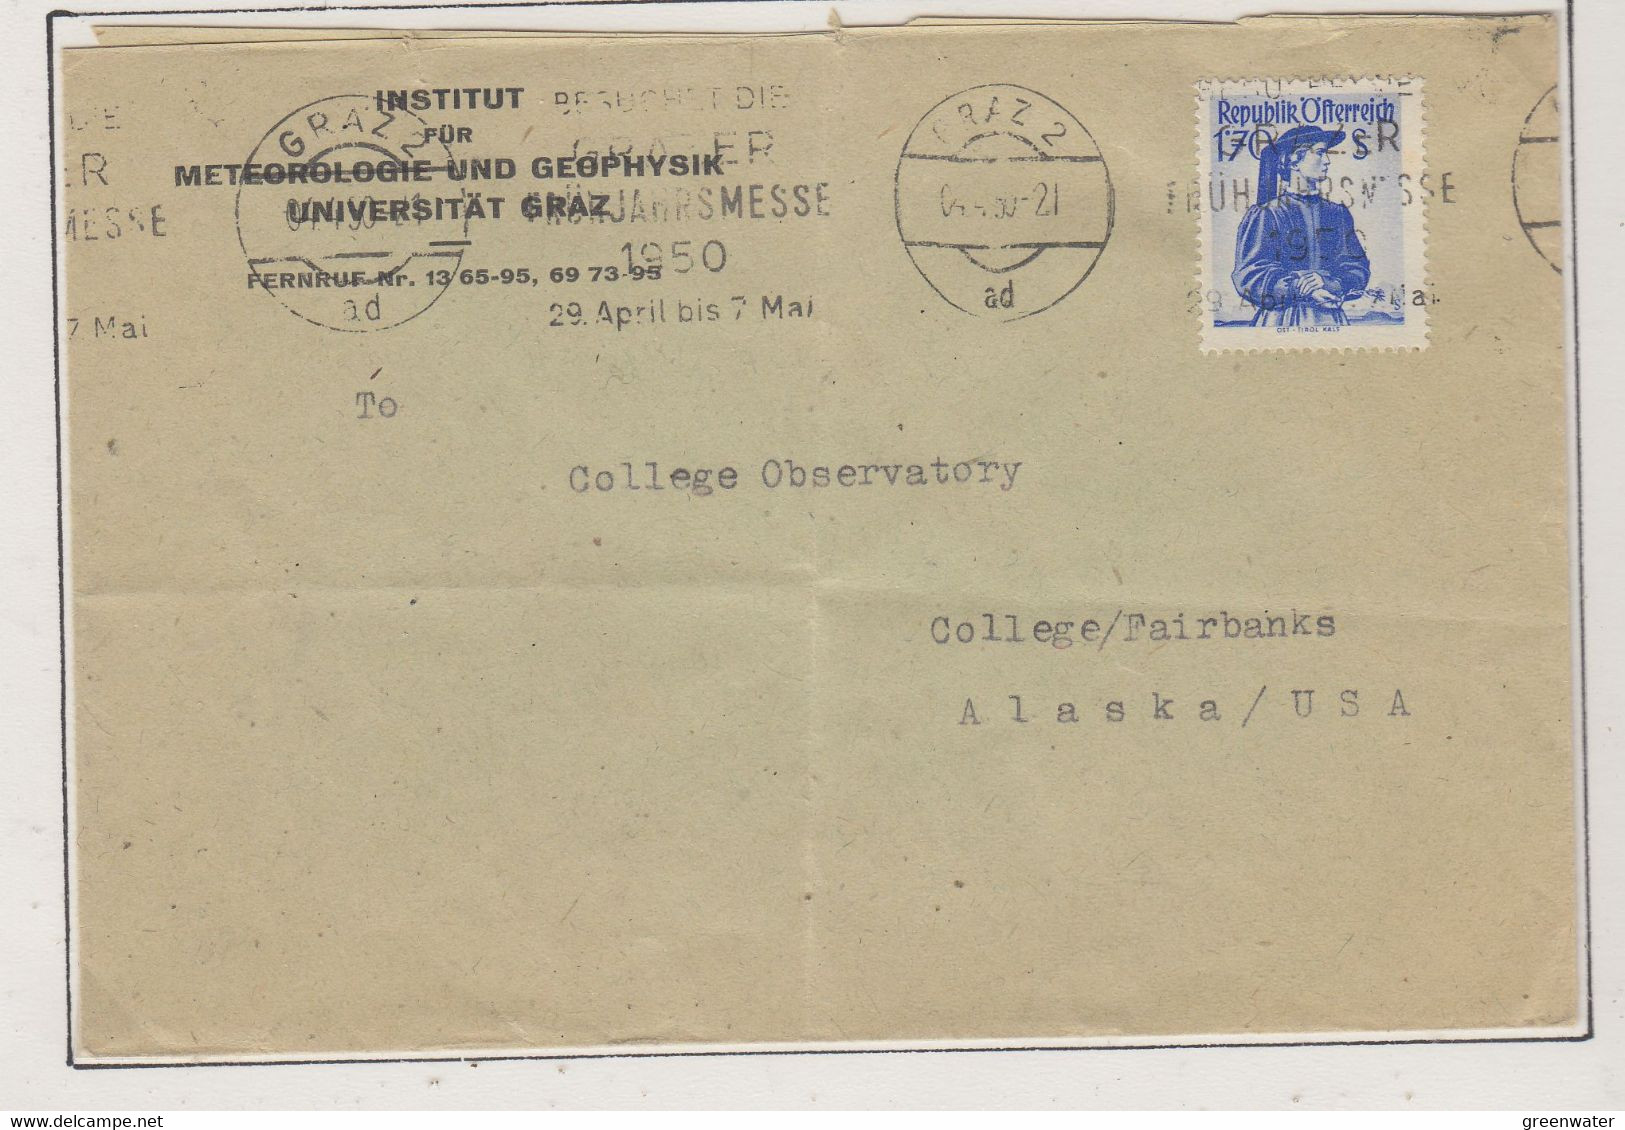 Alaska Fairbanks Cover Send Institut Meteorologie Univ Graz Austria Ca Graz 01.4.1950 (FB152A) - Research Programs